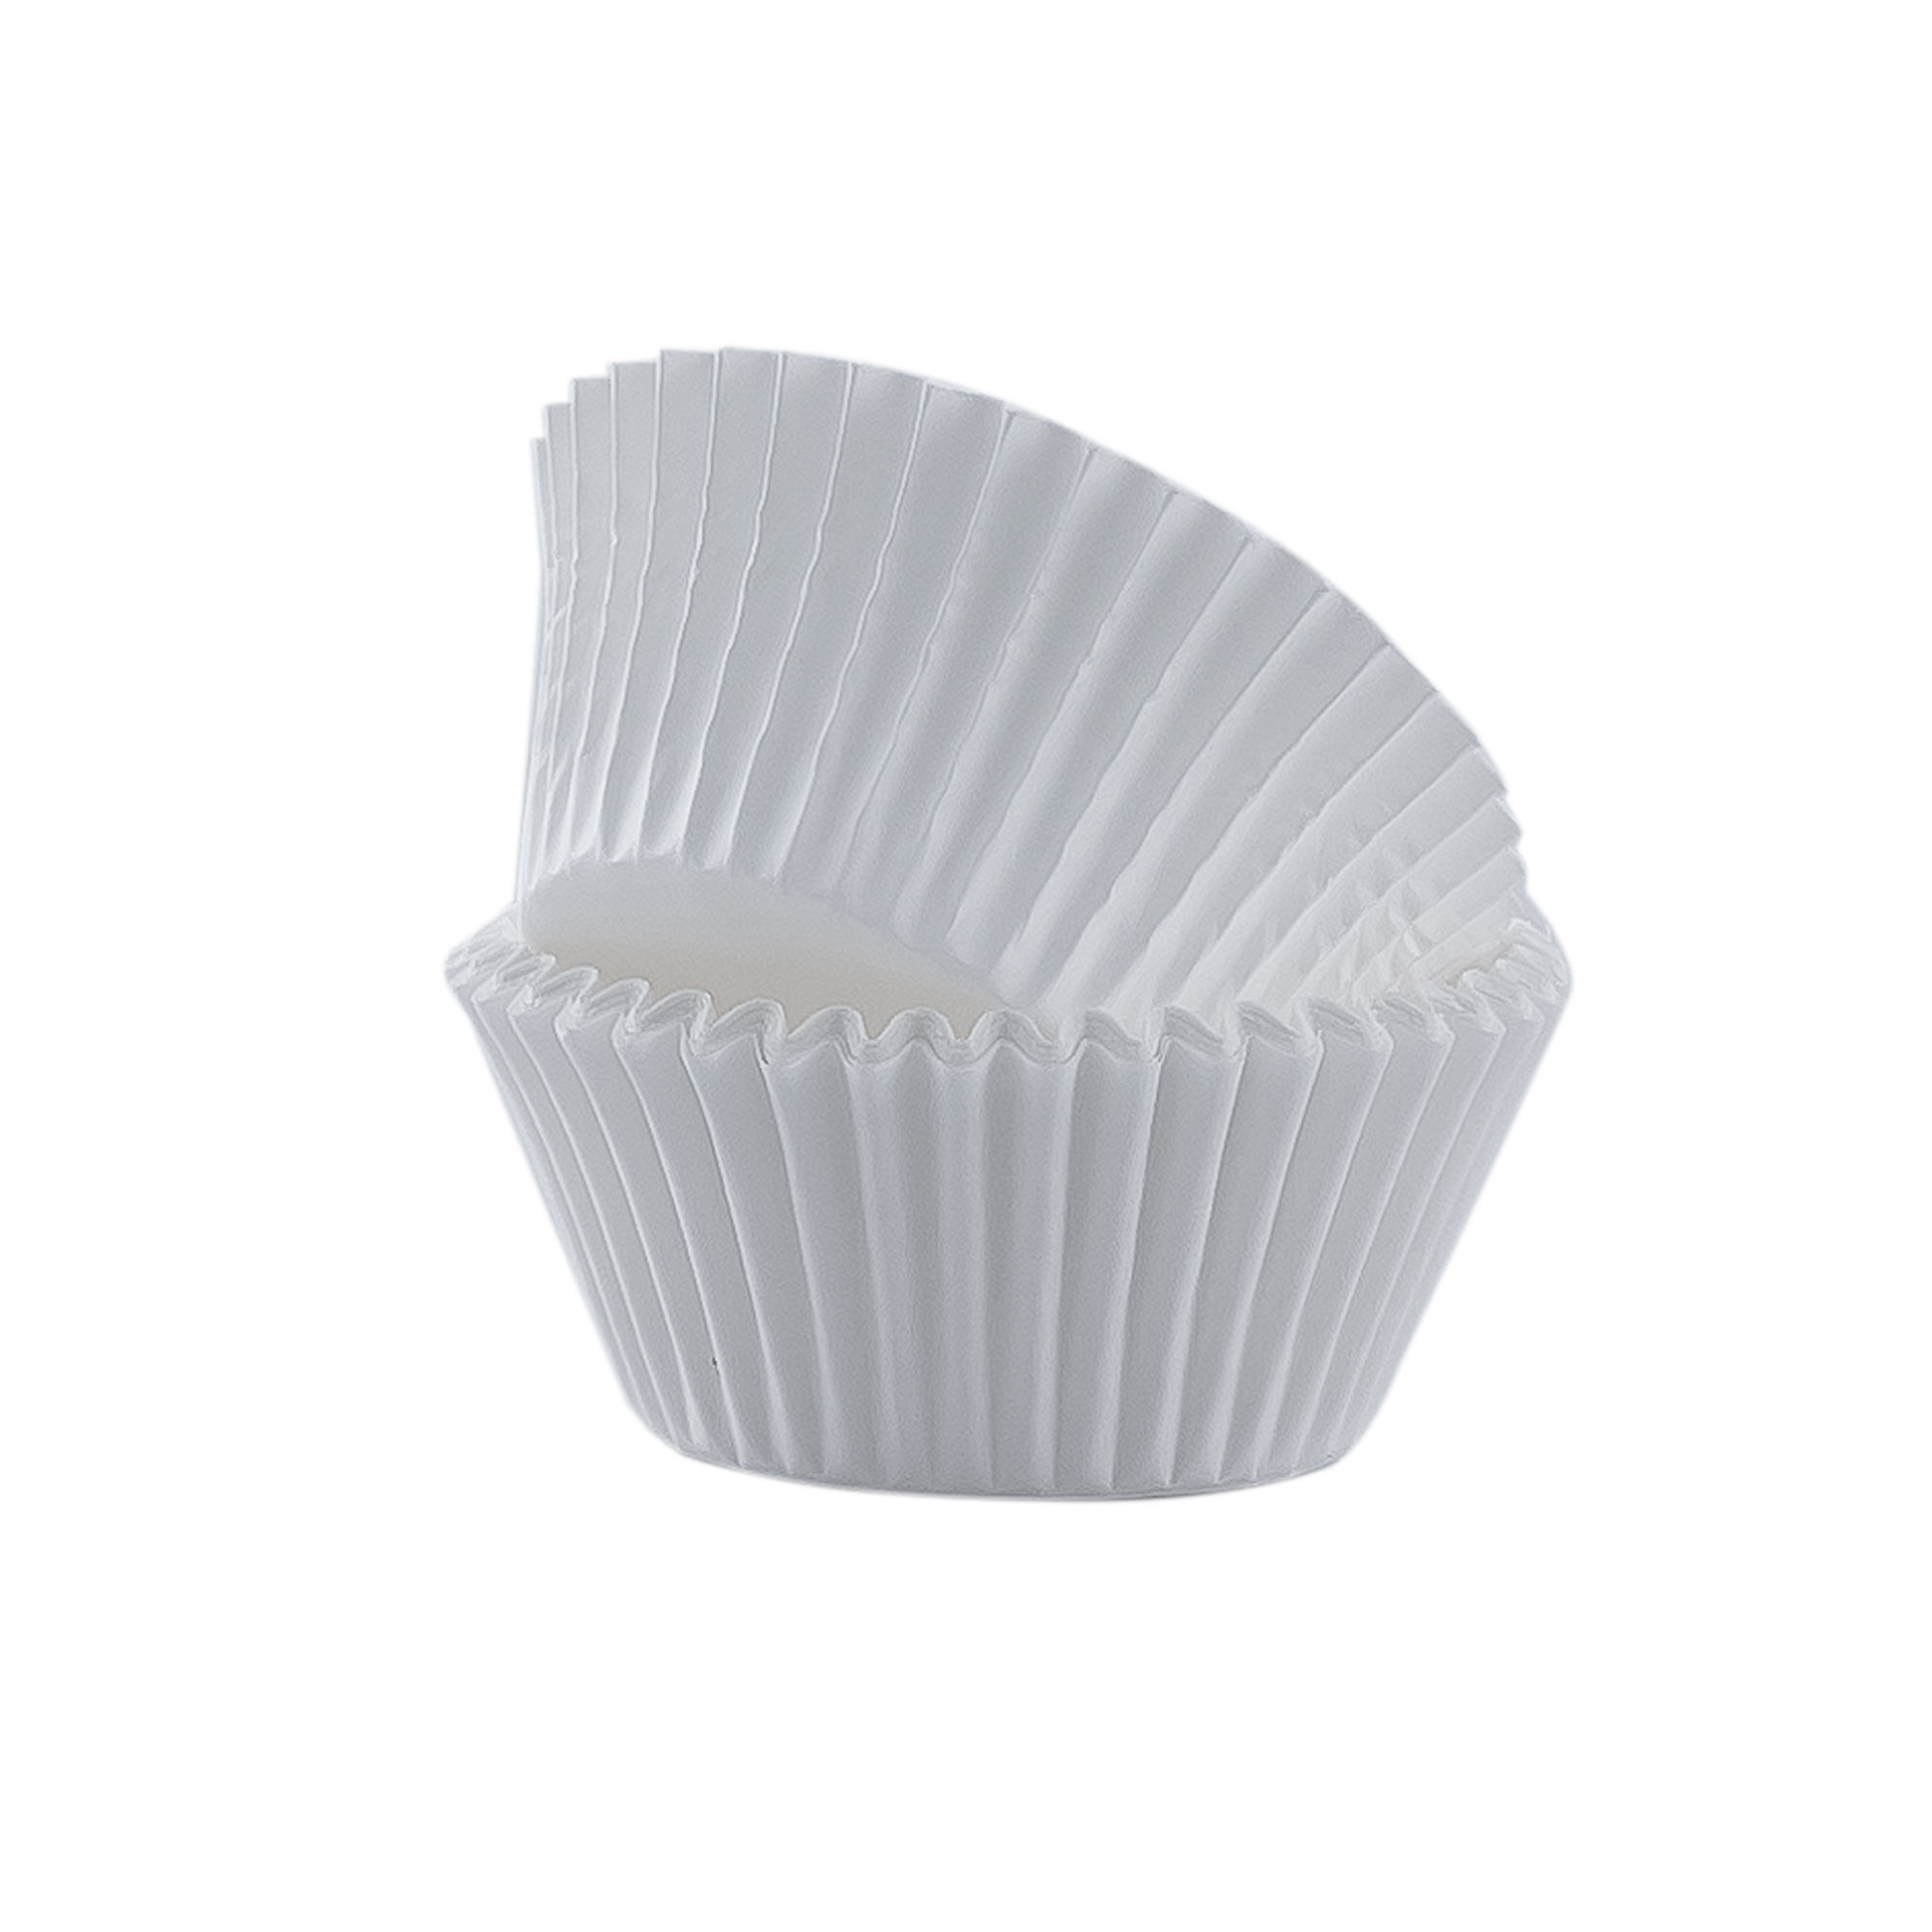 Cupcake Baking Cups (6 cm, Floral Design & White Colour)